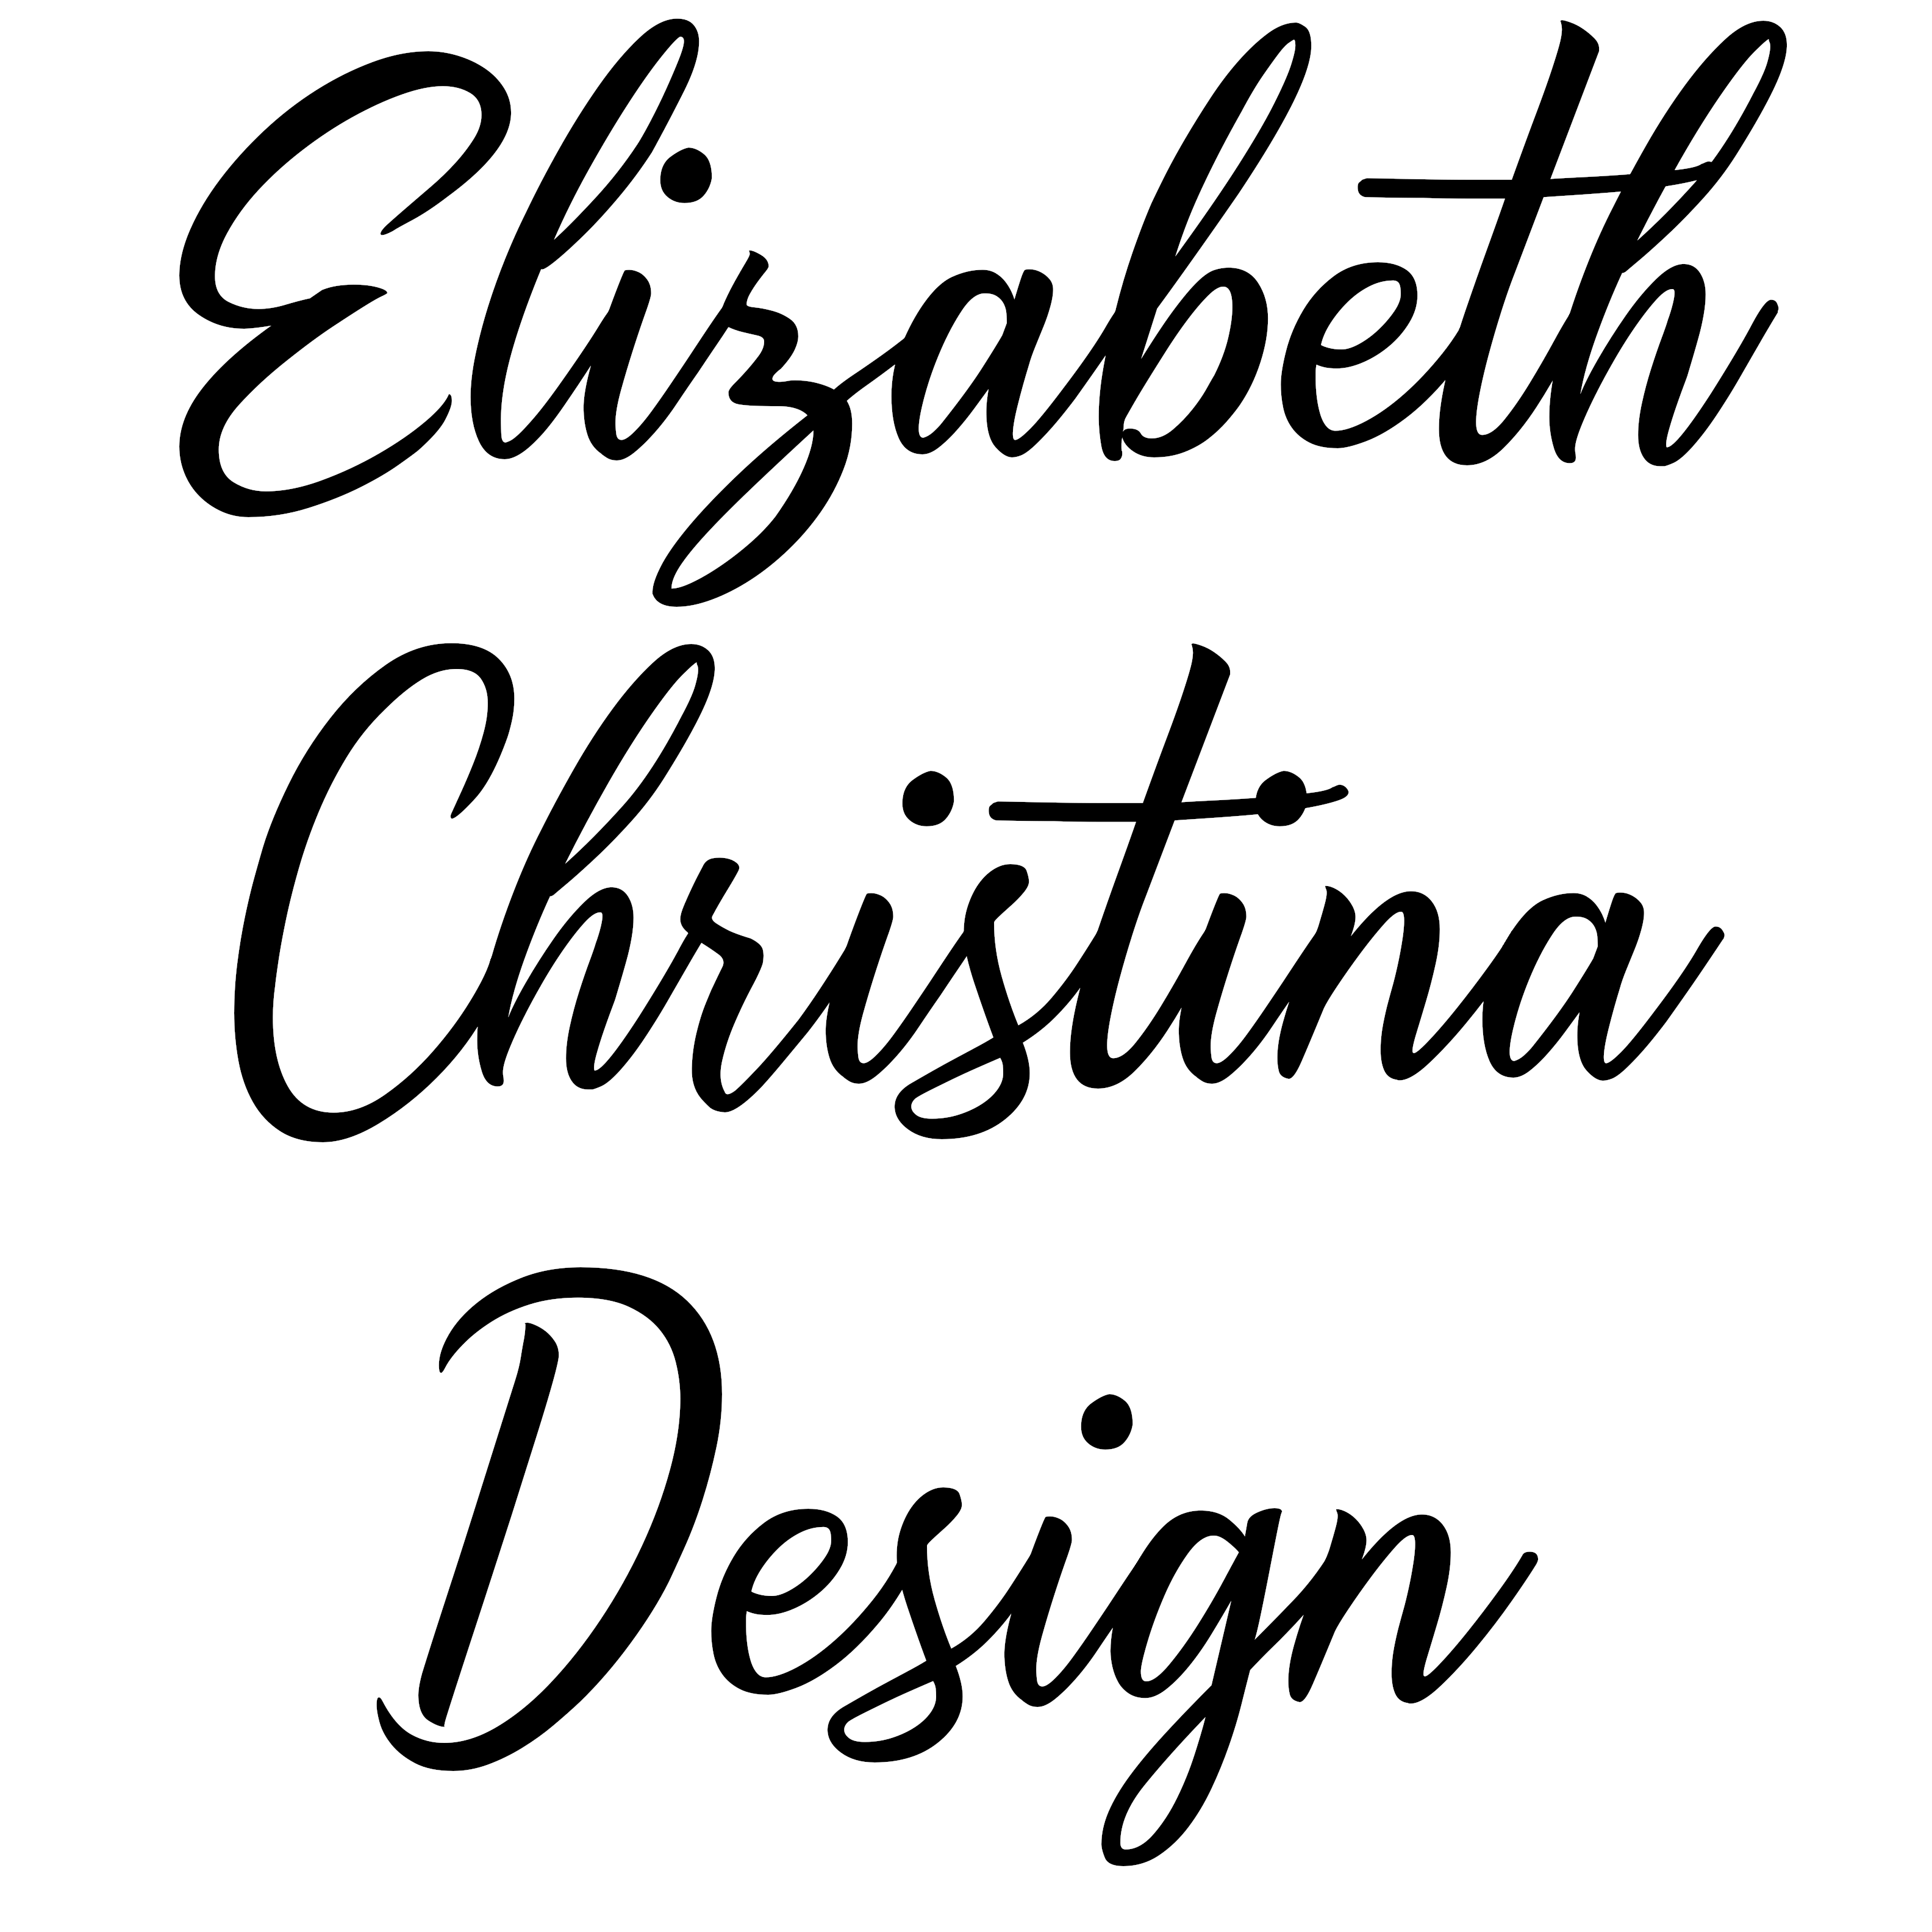 Elizabeth Christina Design